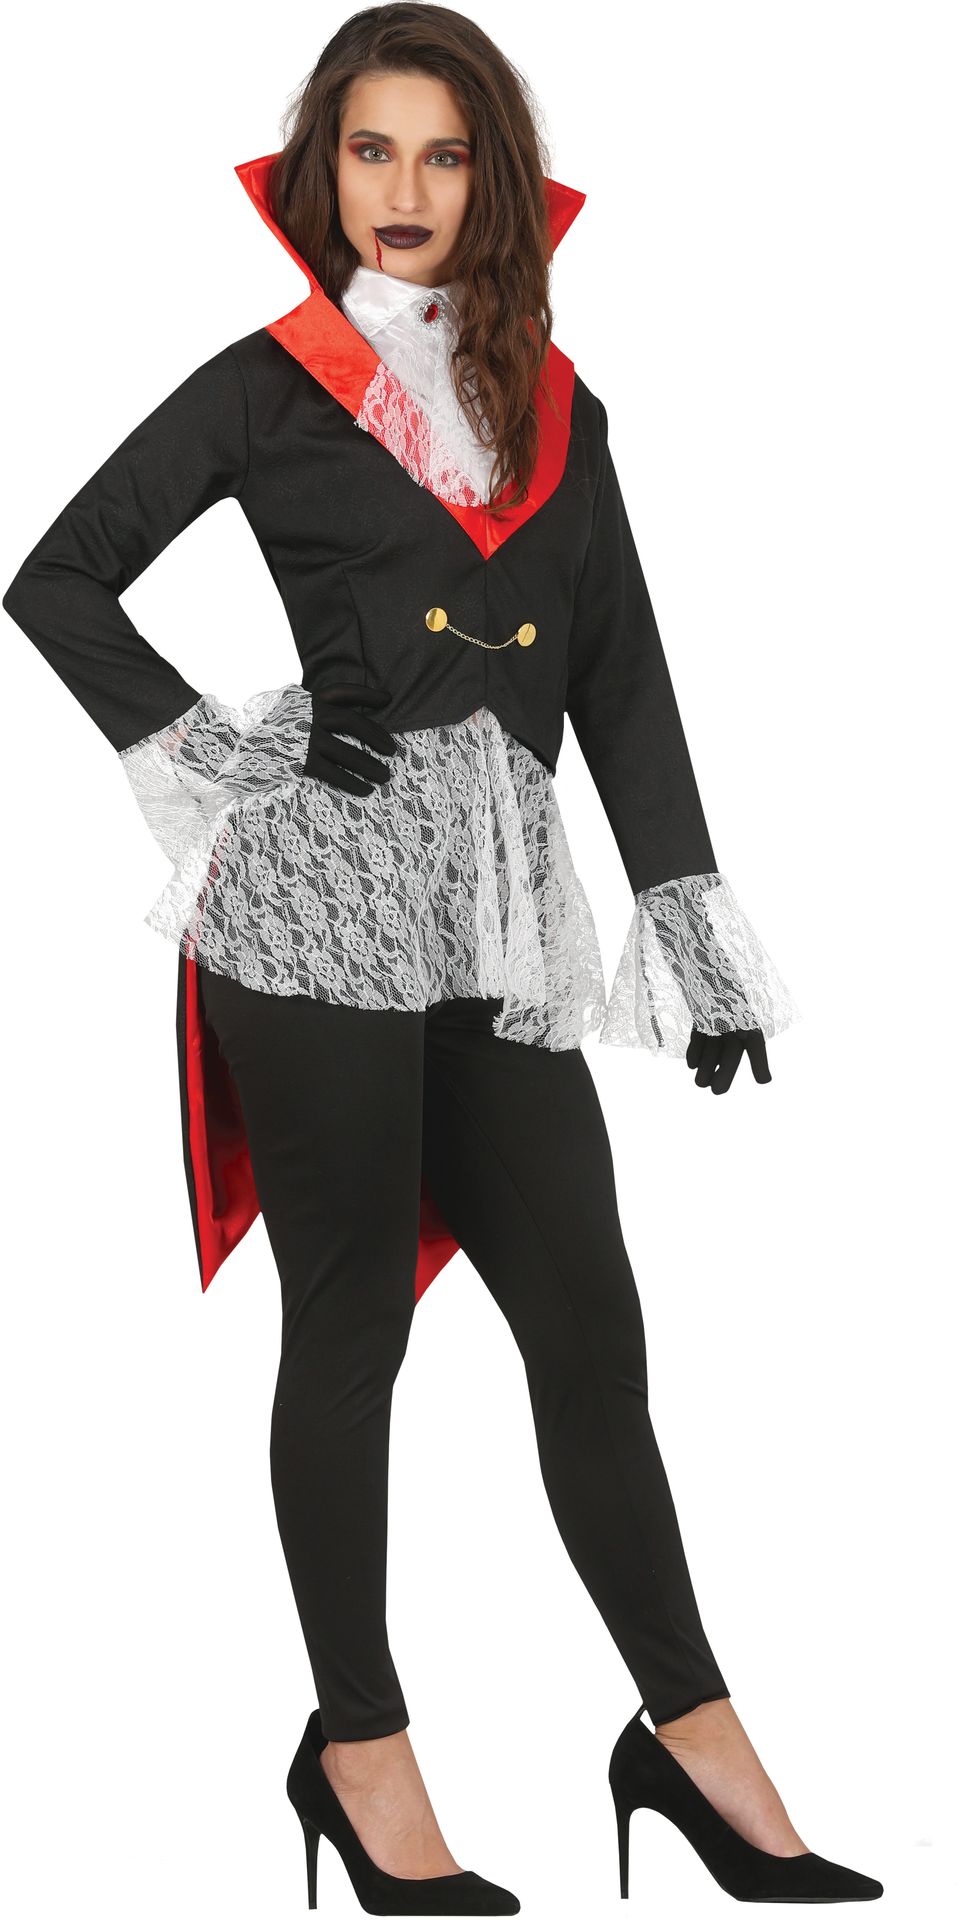 redden springen Kostuums Vampier outfit dame | Carnavalskleding.nl